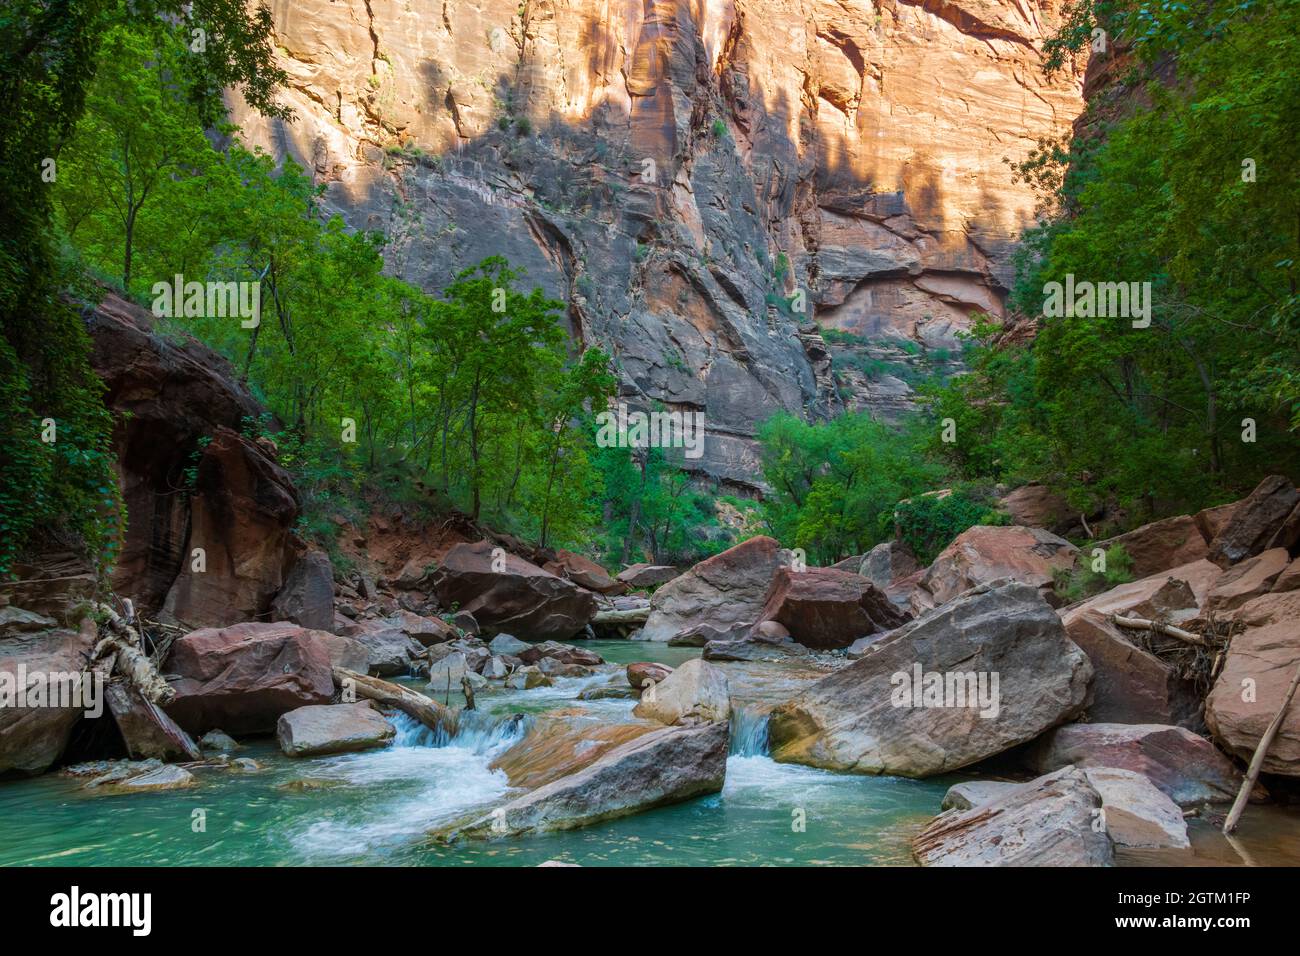 The Virgin River as it flows through Zion national park Stock Photo